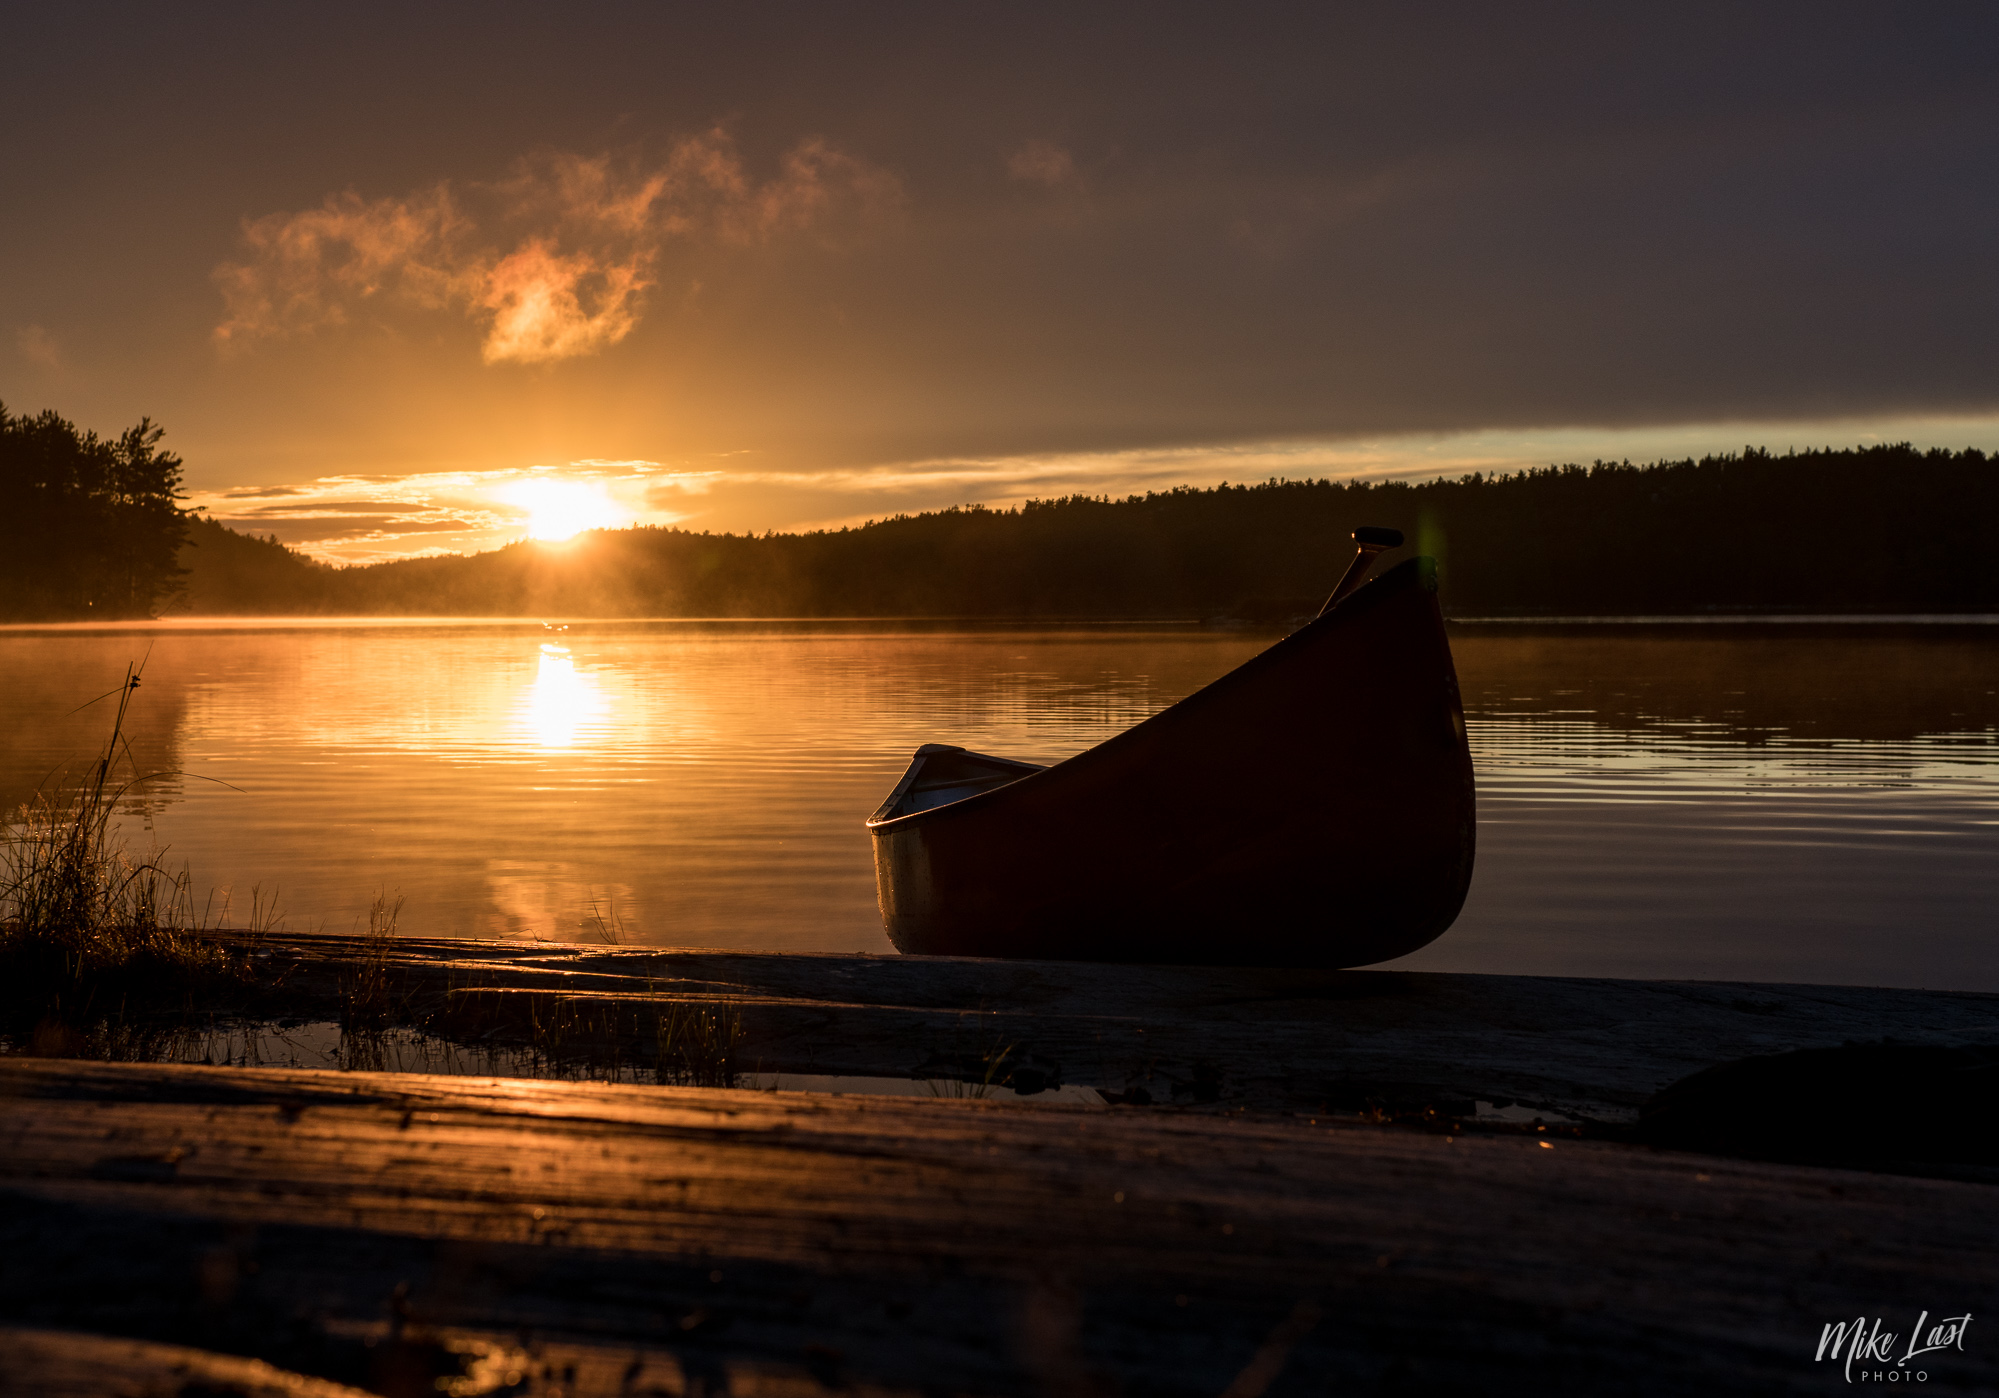 Sunset from David Lake - Killarney Provincial Park